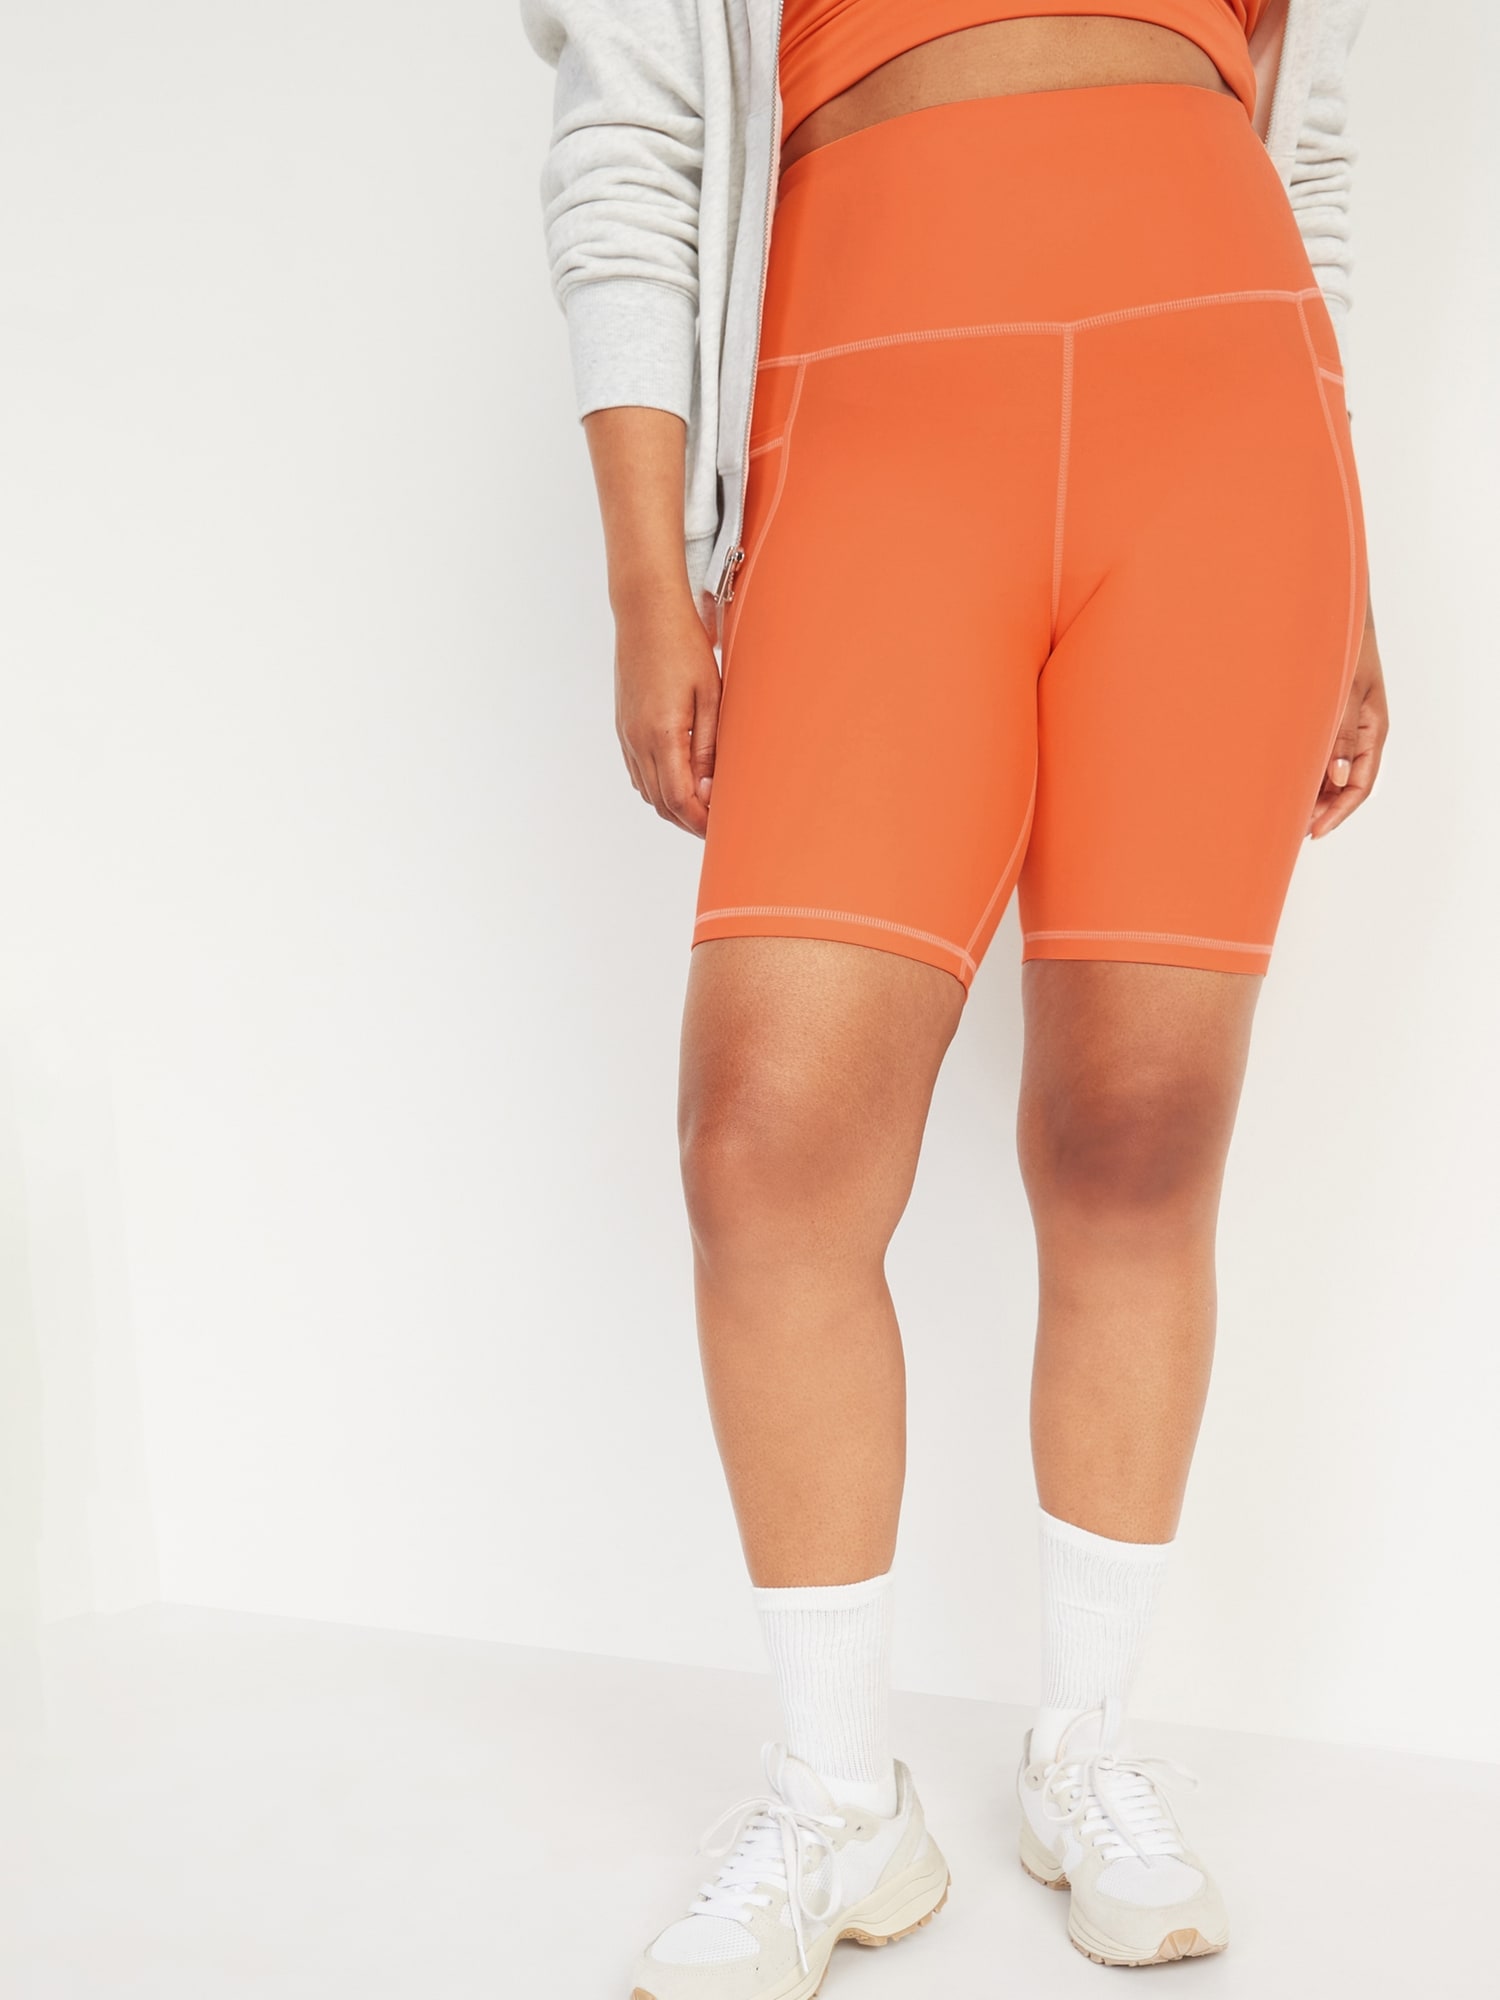 HighWaisted PowerSoft SidePocket Biker Shorts for Women 8inch